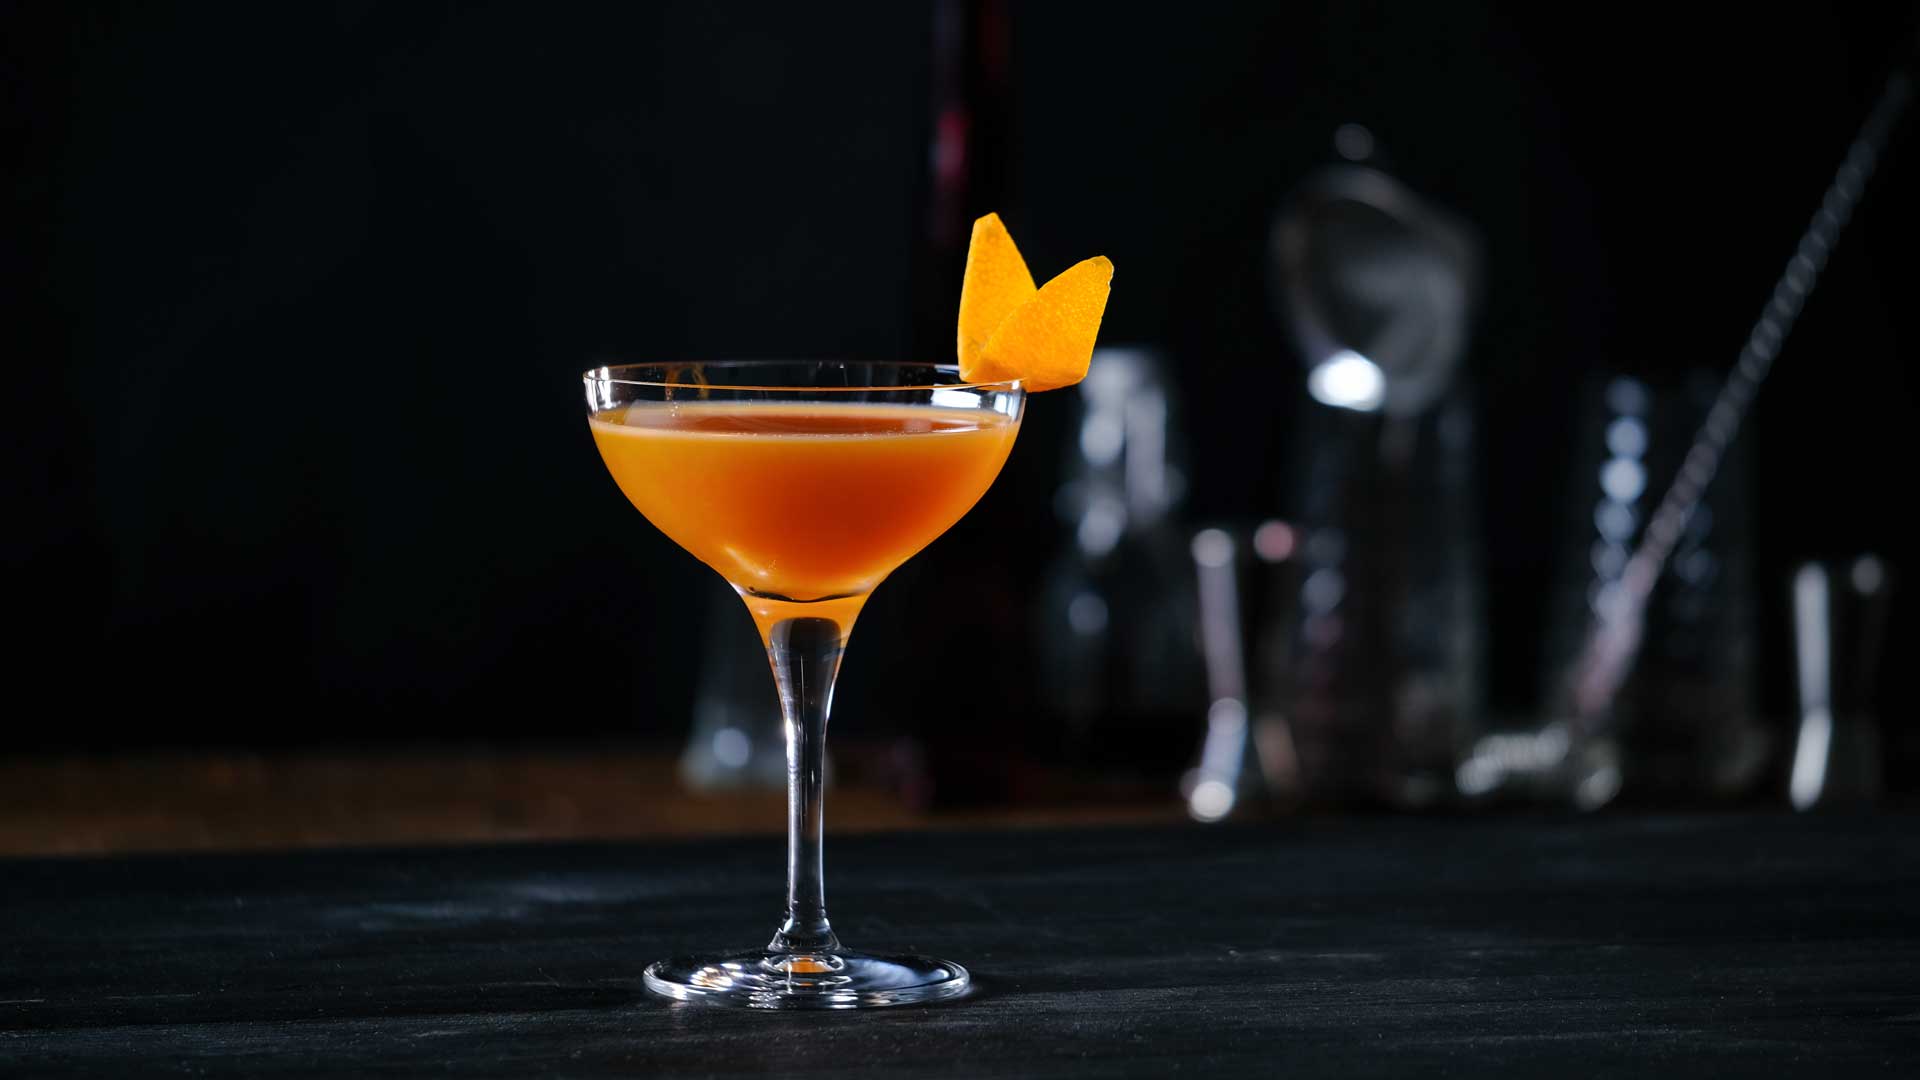 jasmine-cocktail-ricetta-ingredienti-coqtail-milano